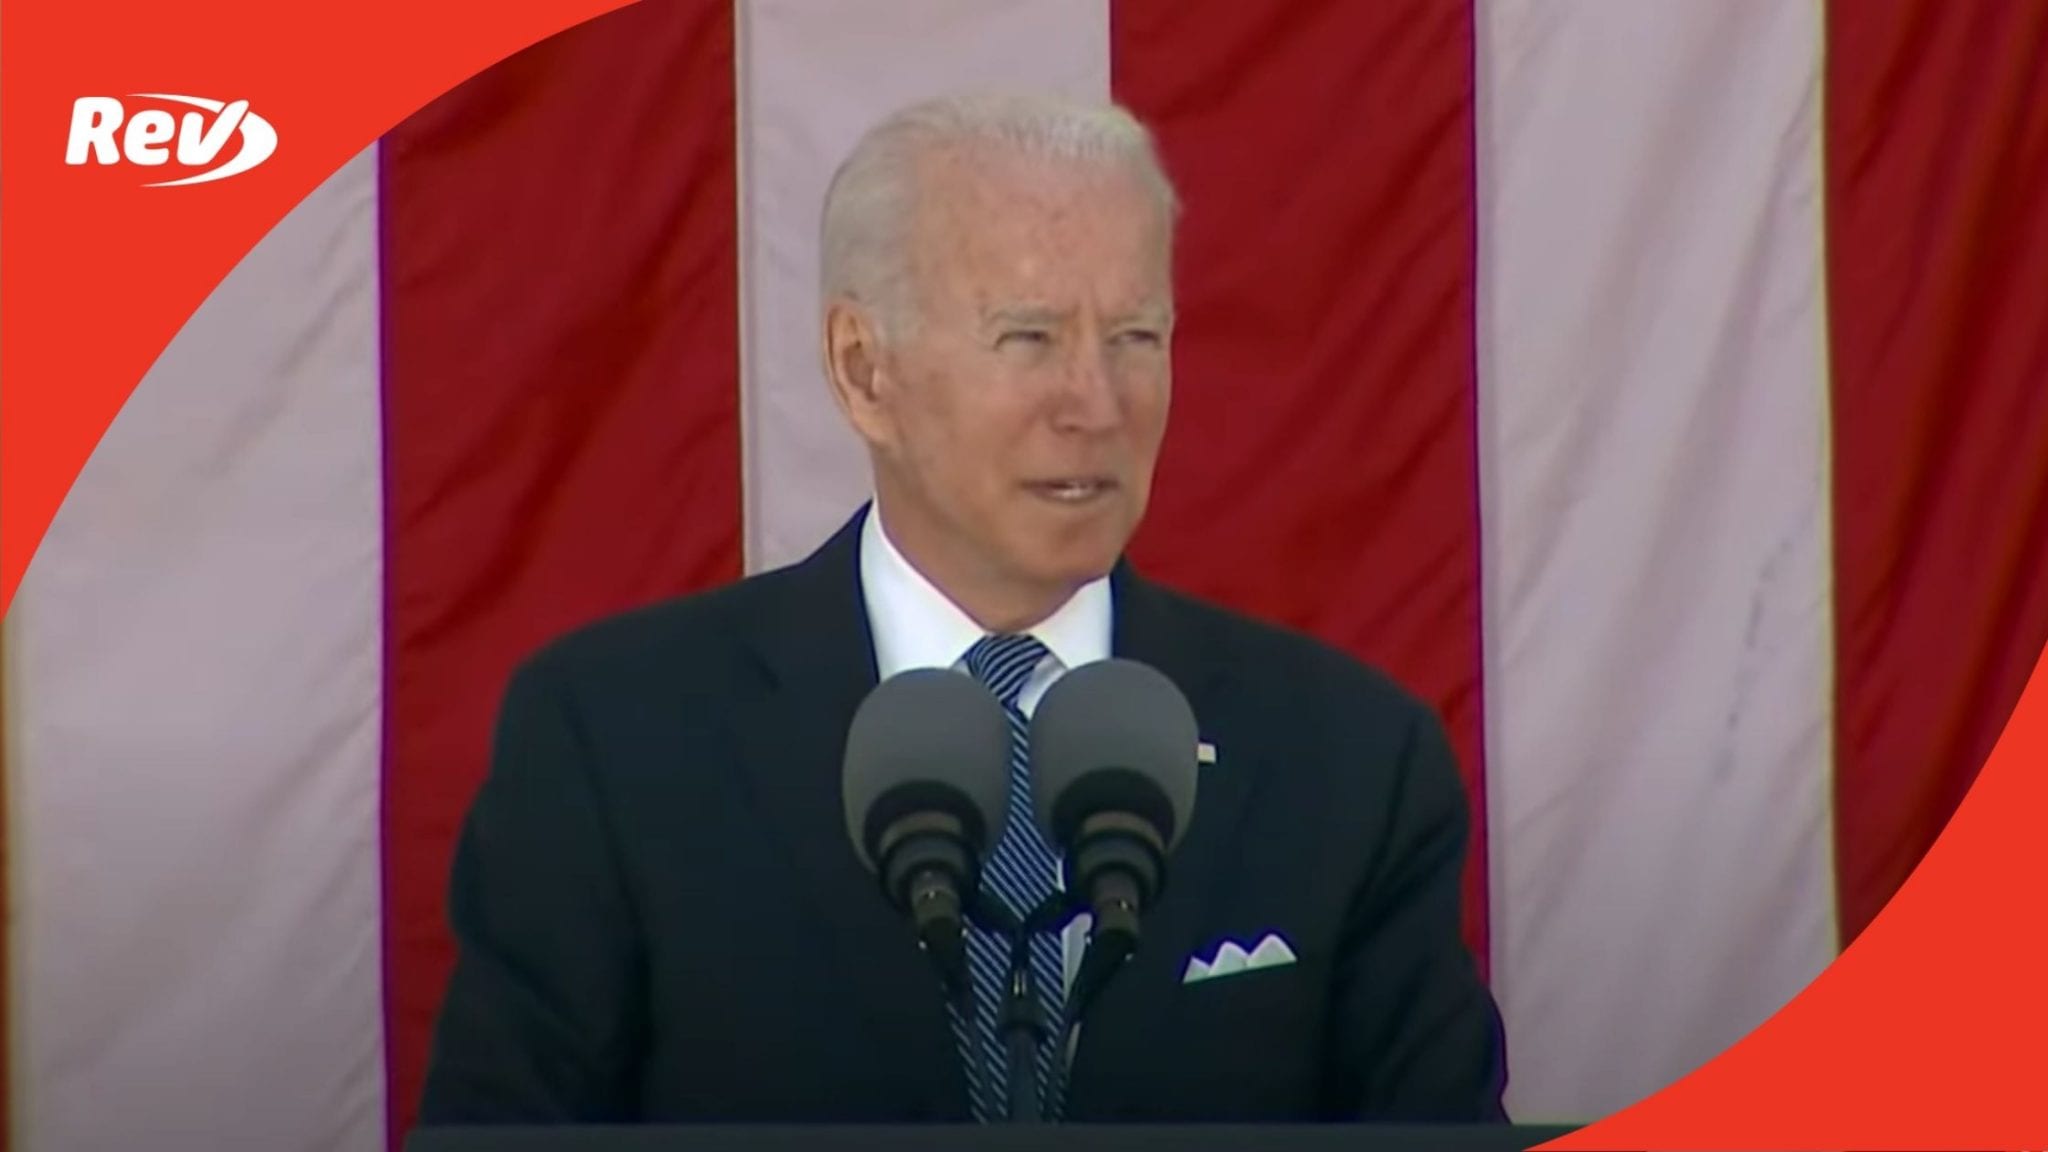 Joe Biden Memorial Day Speech Transcript 2021